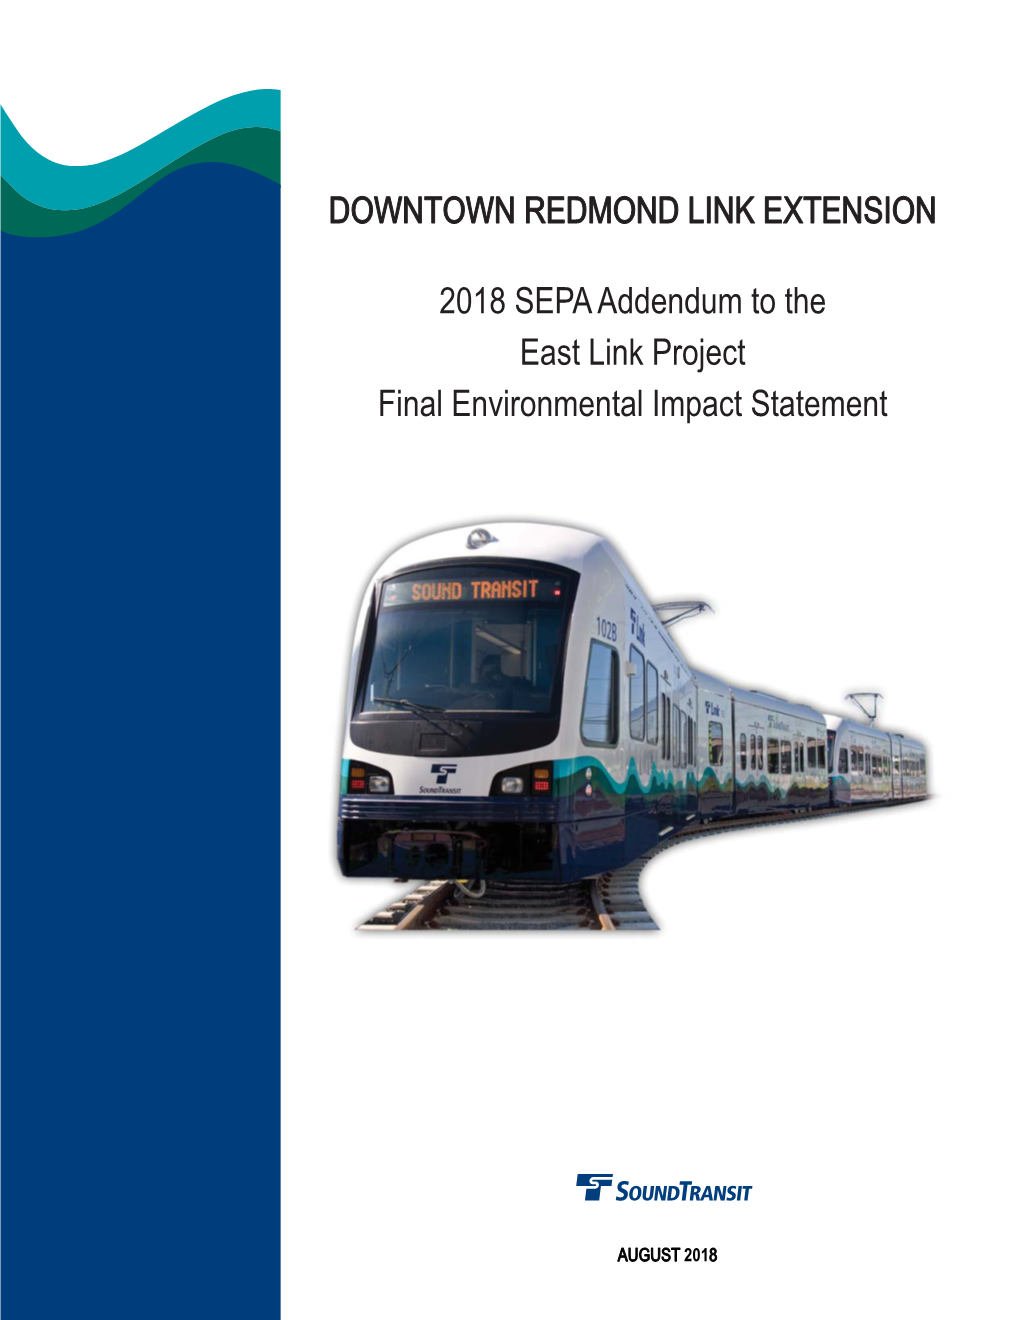 Downtown Redmond Link Extension 2018 SEPA Addendum to the East